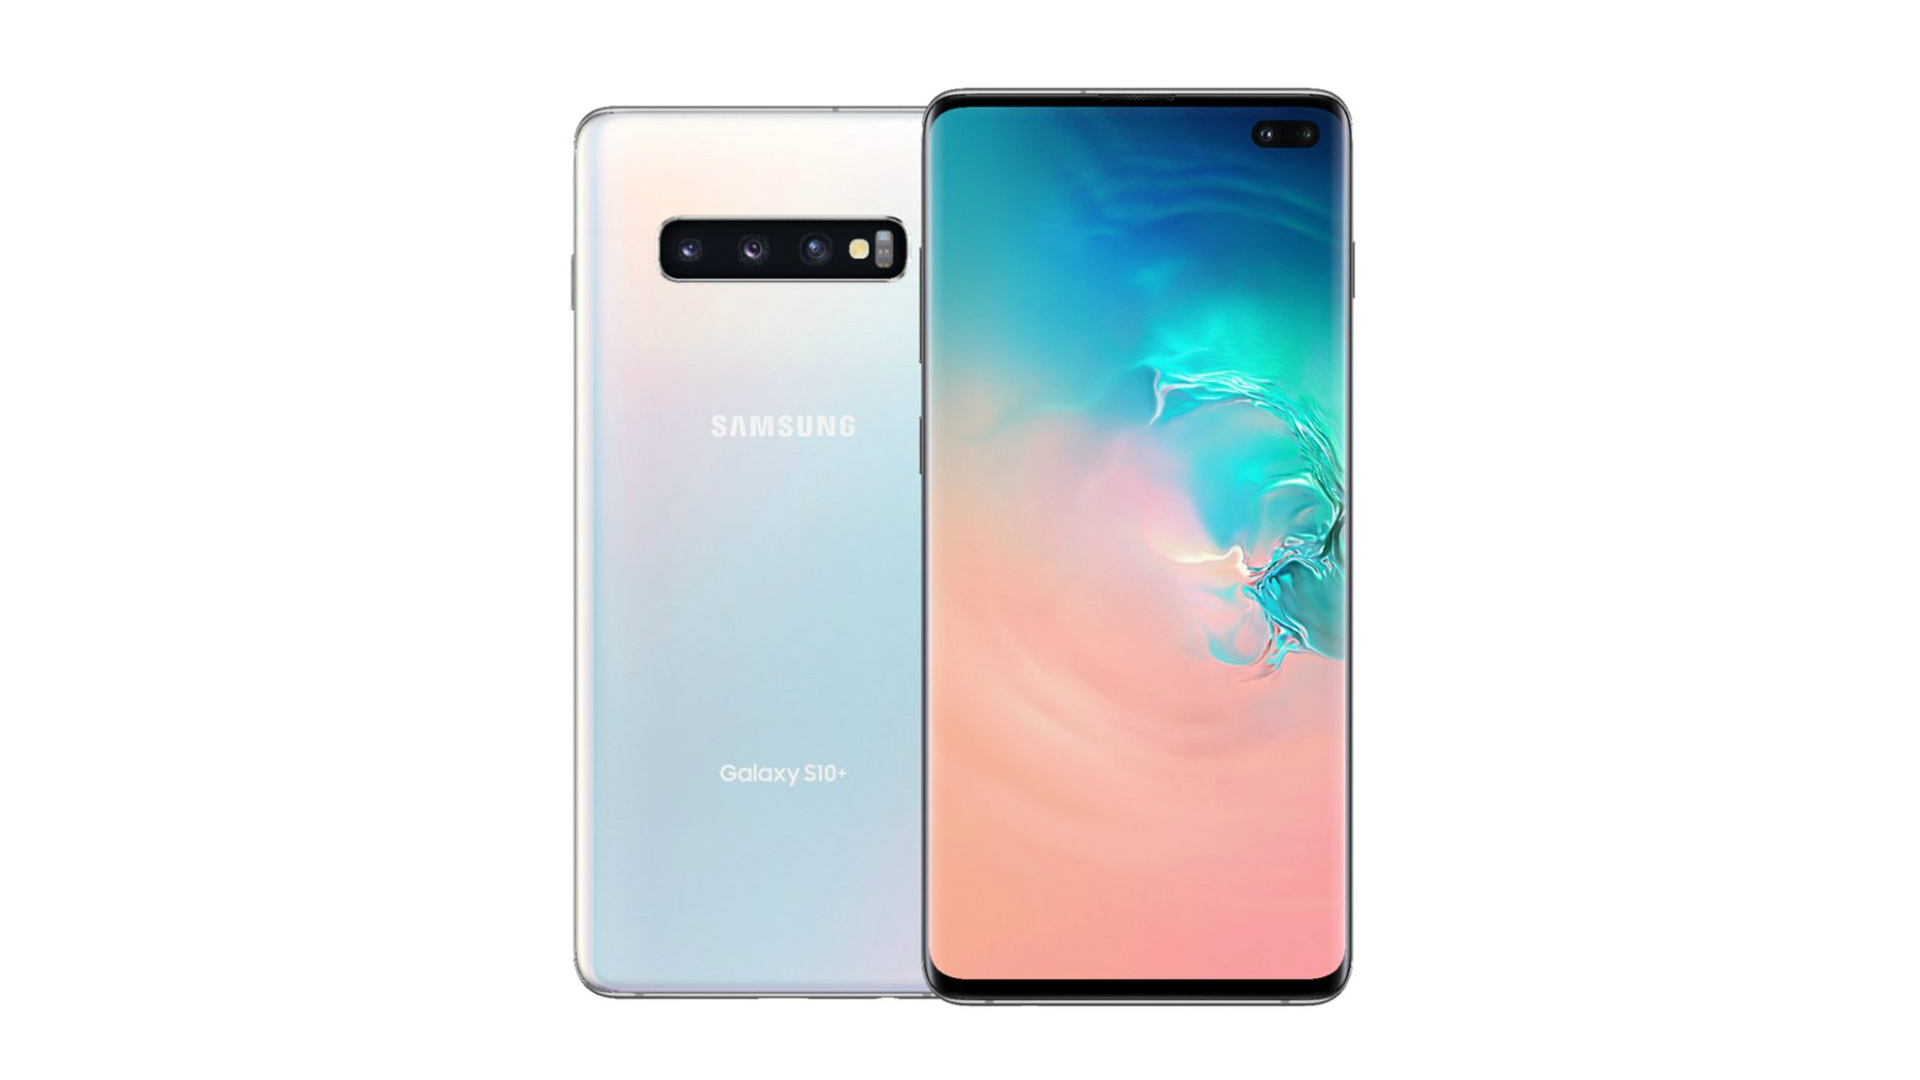 Samsung Galaxy S10 Plus press render